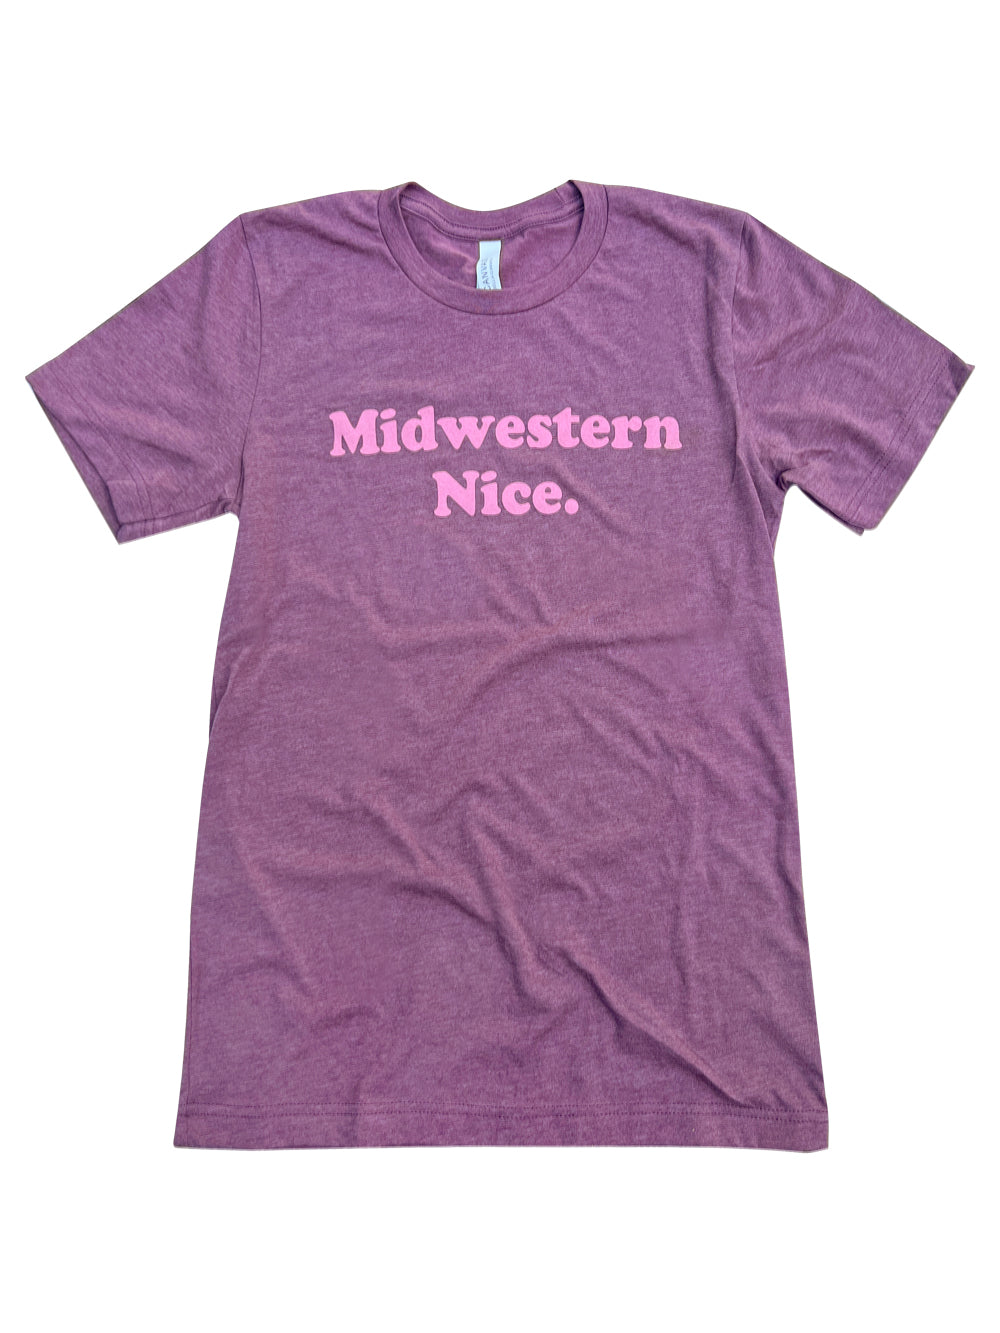 Midwestern Nice Heather Maroon t-shirt